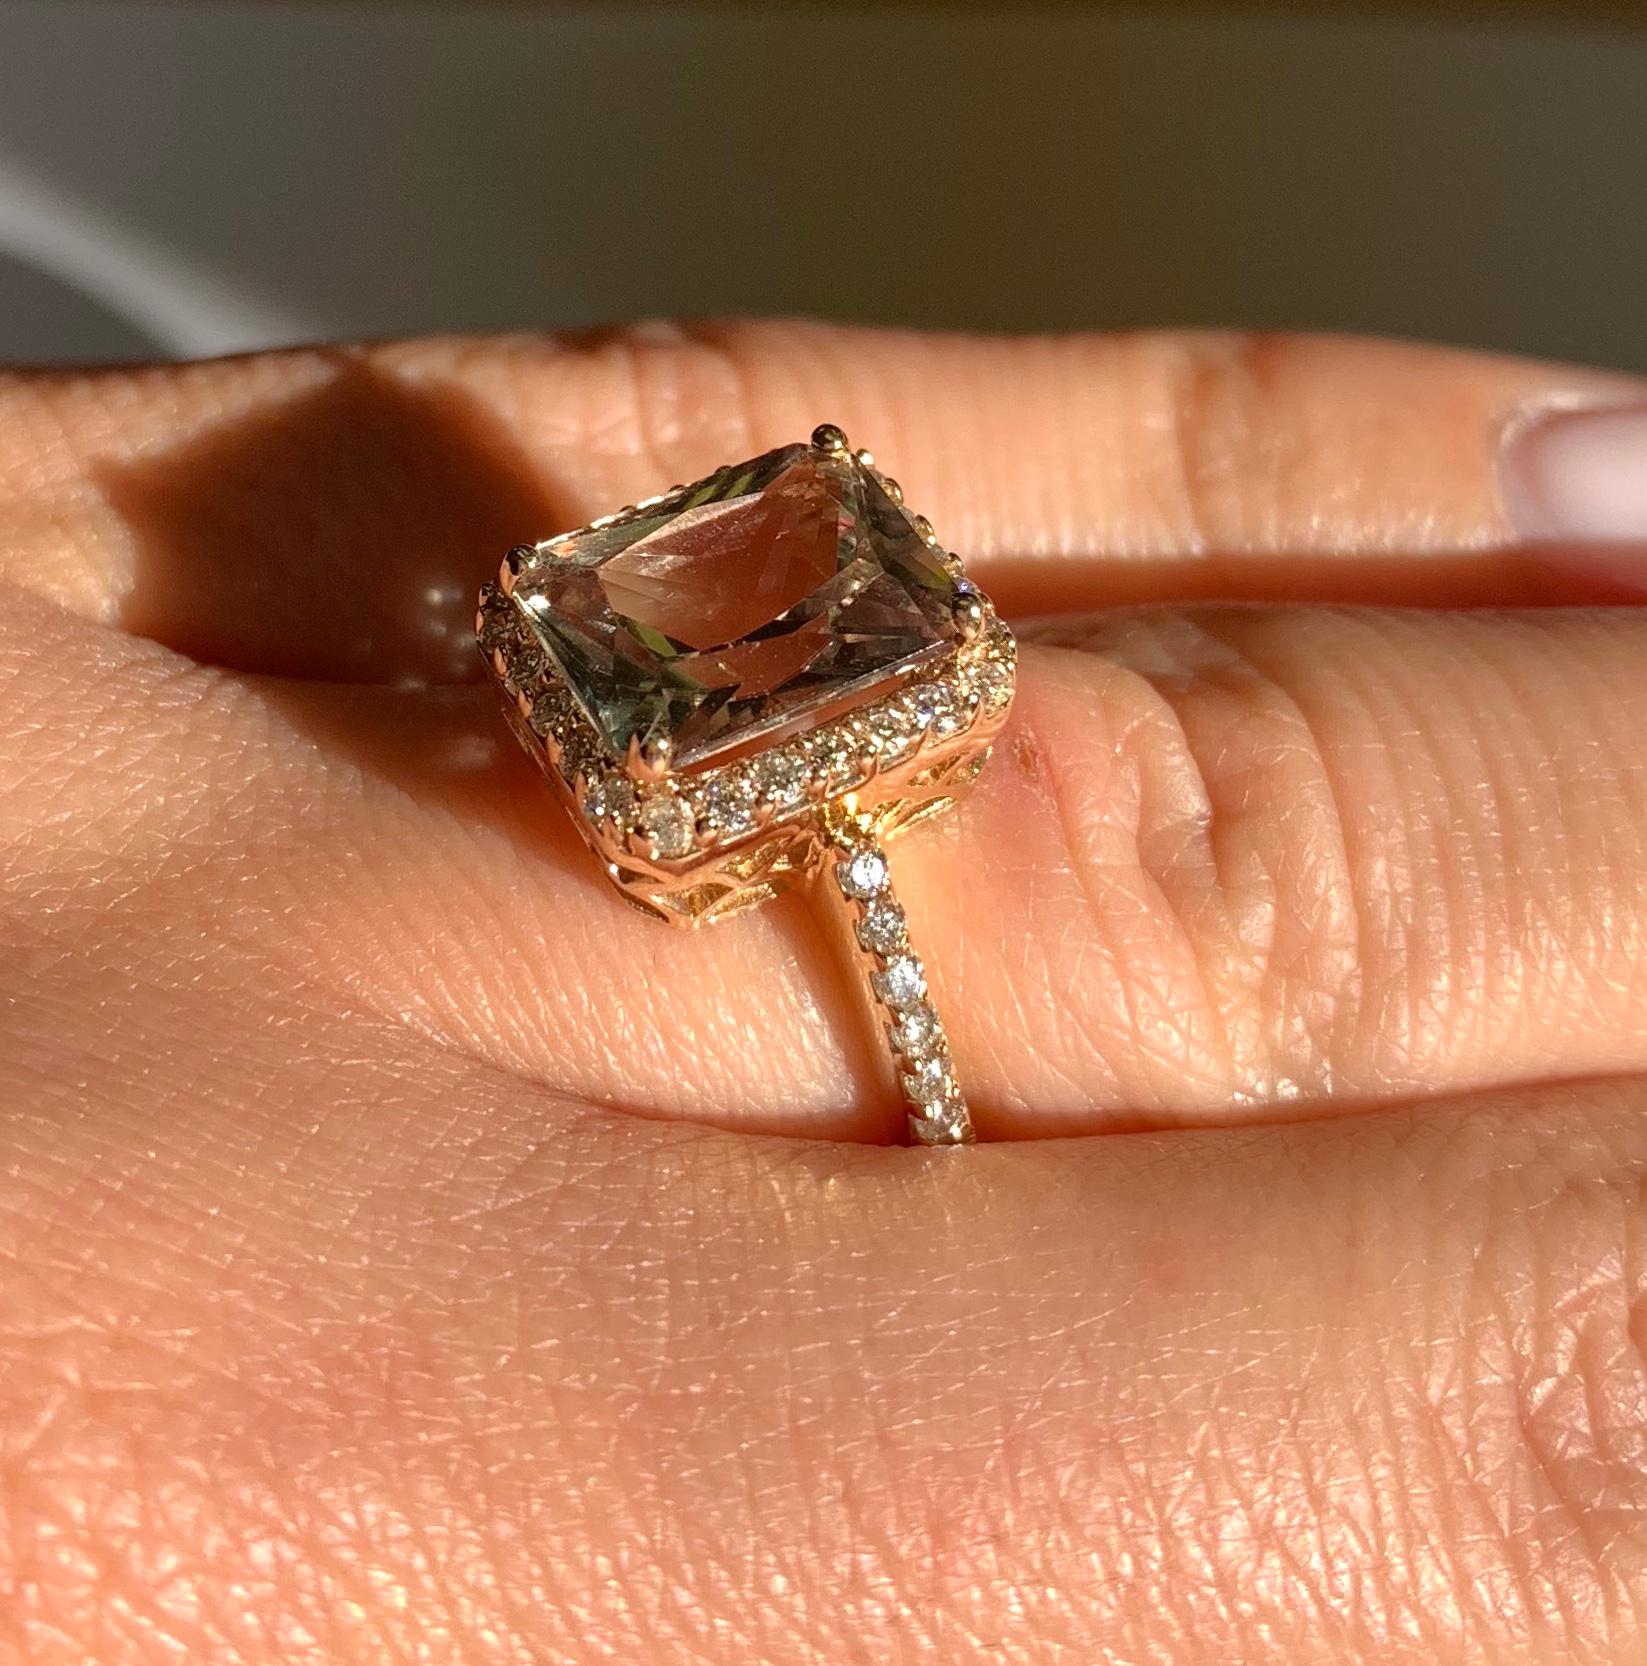 3.7 carat diamond ring